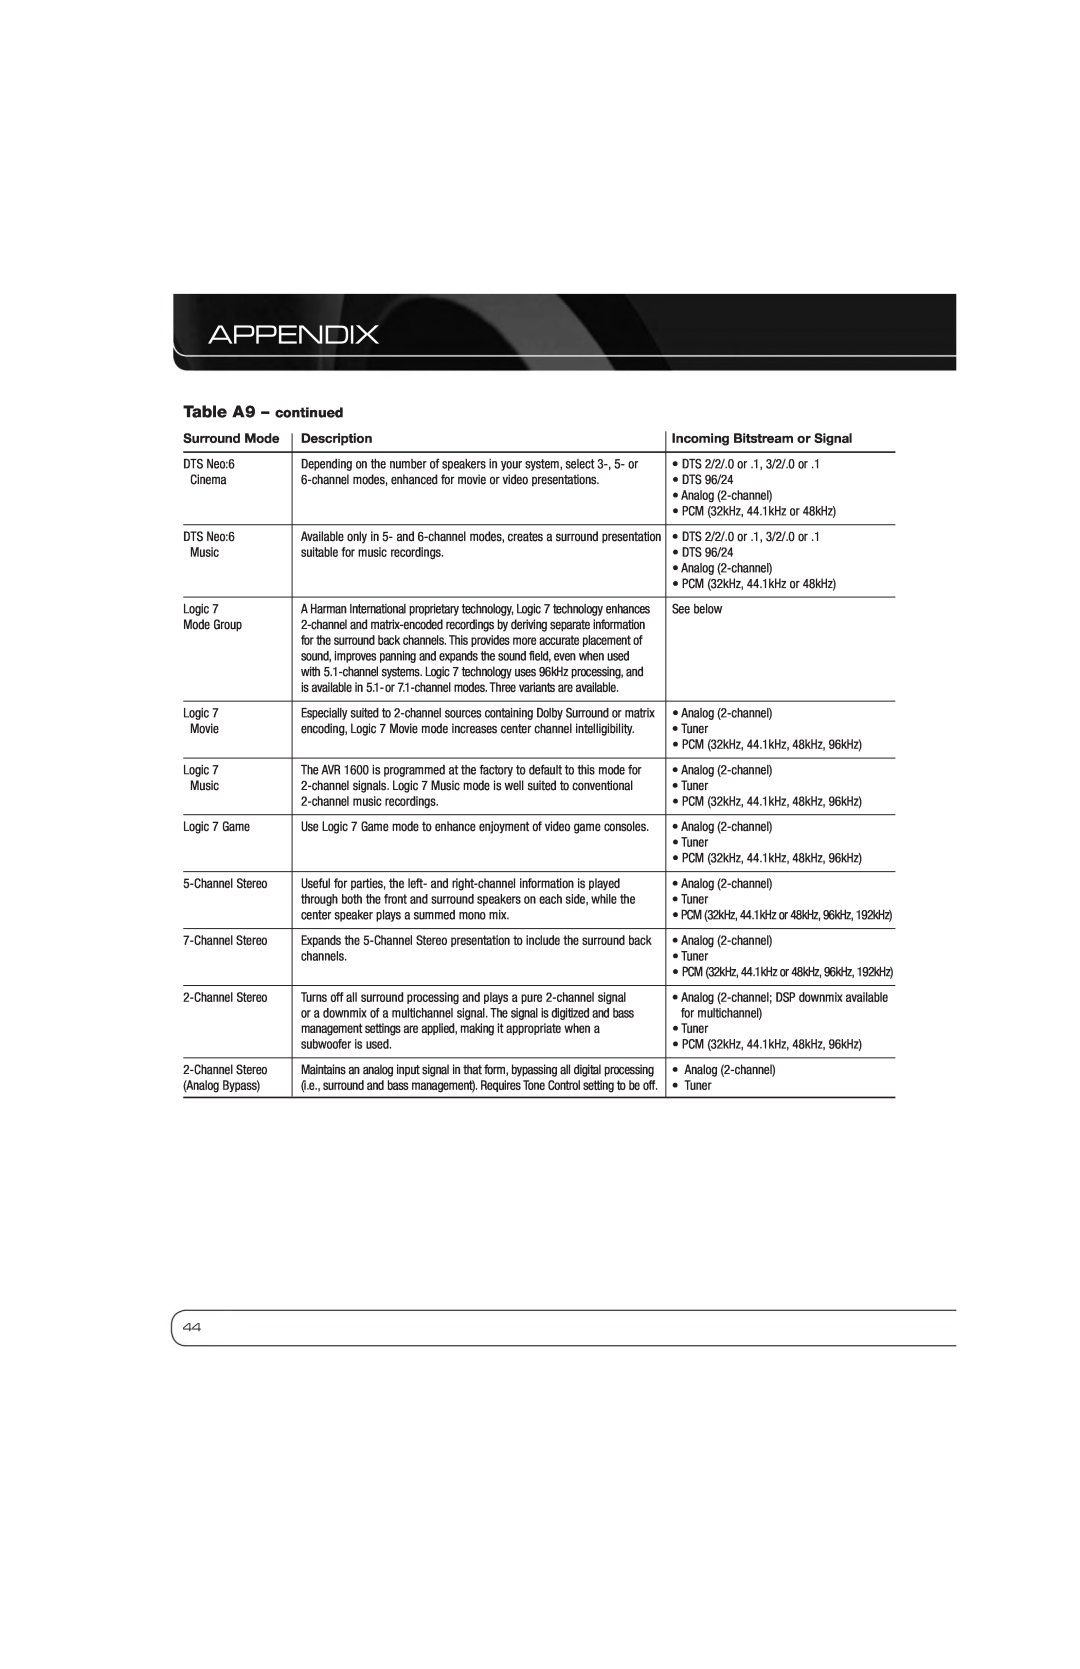 Harman-Kardon AVR 1600 Appendix, Table A9 - continued, Surround Mode, Description, Incoming Bitstream or Signal 